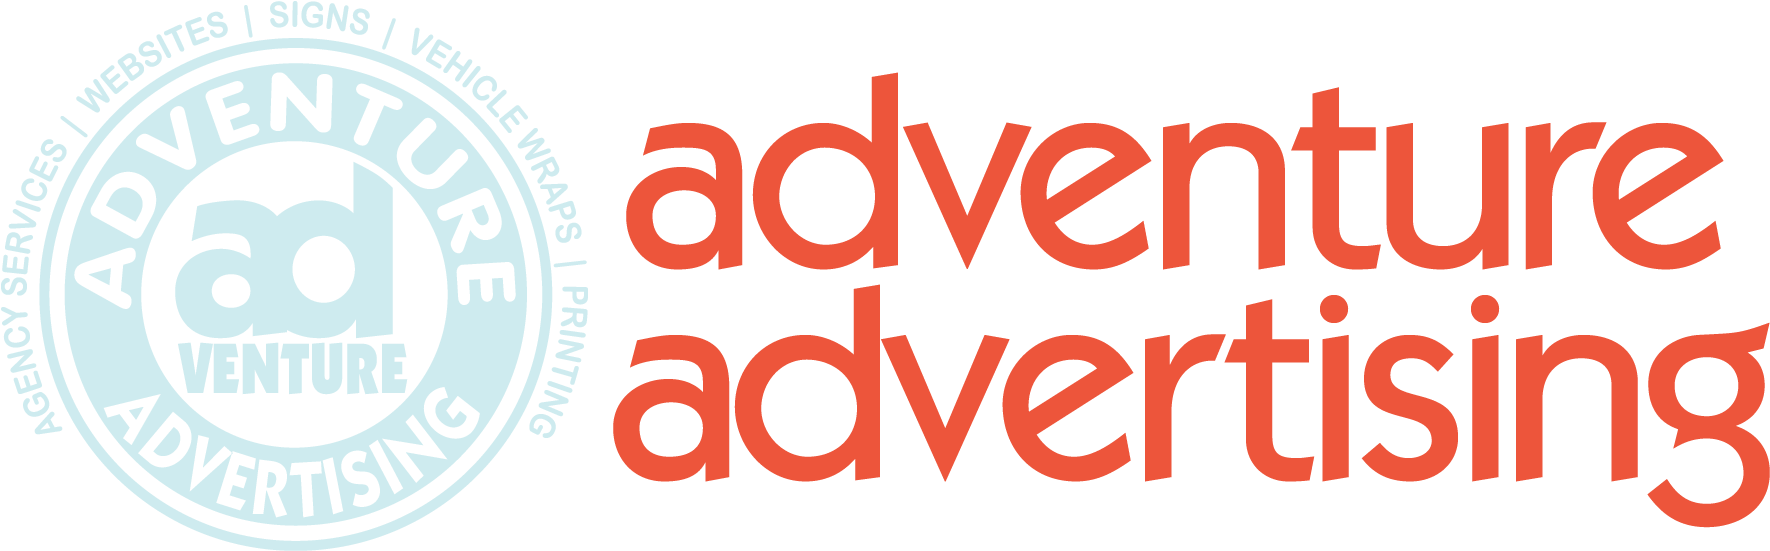 Adventure Advertising Logo PNG